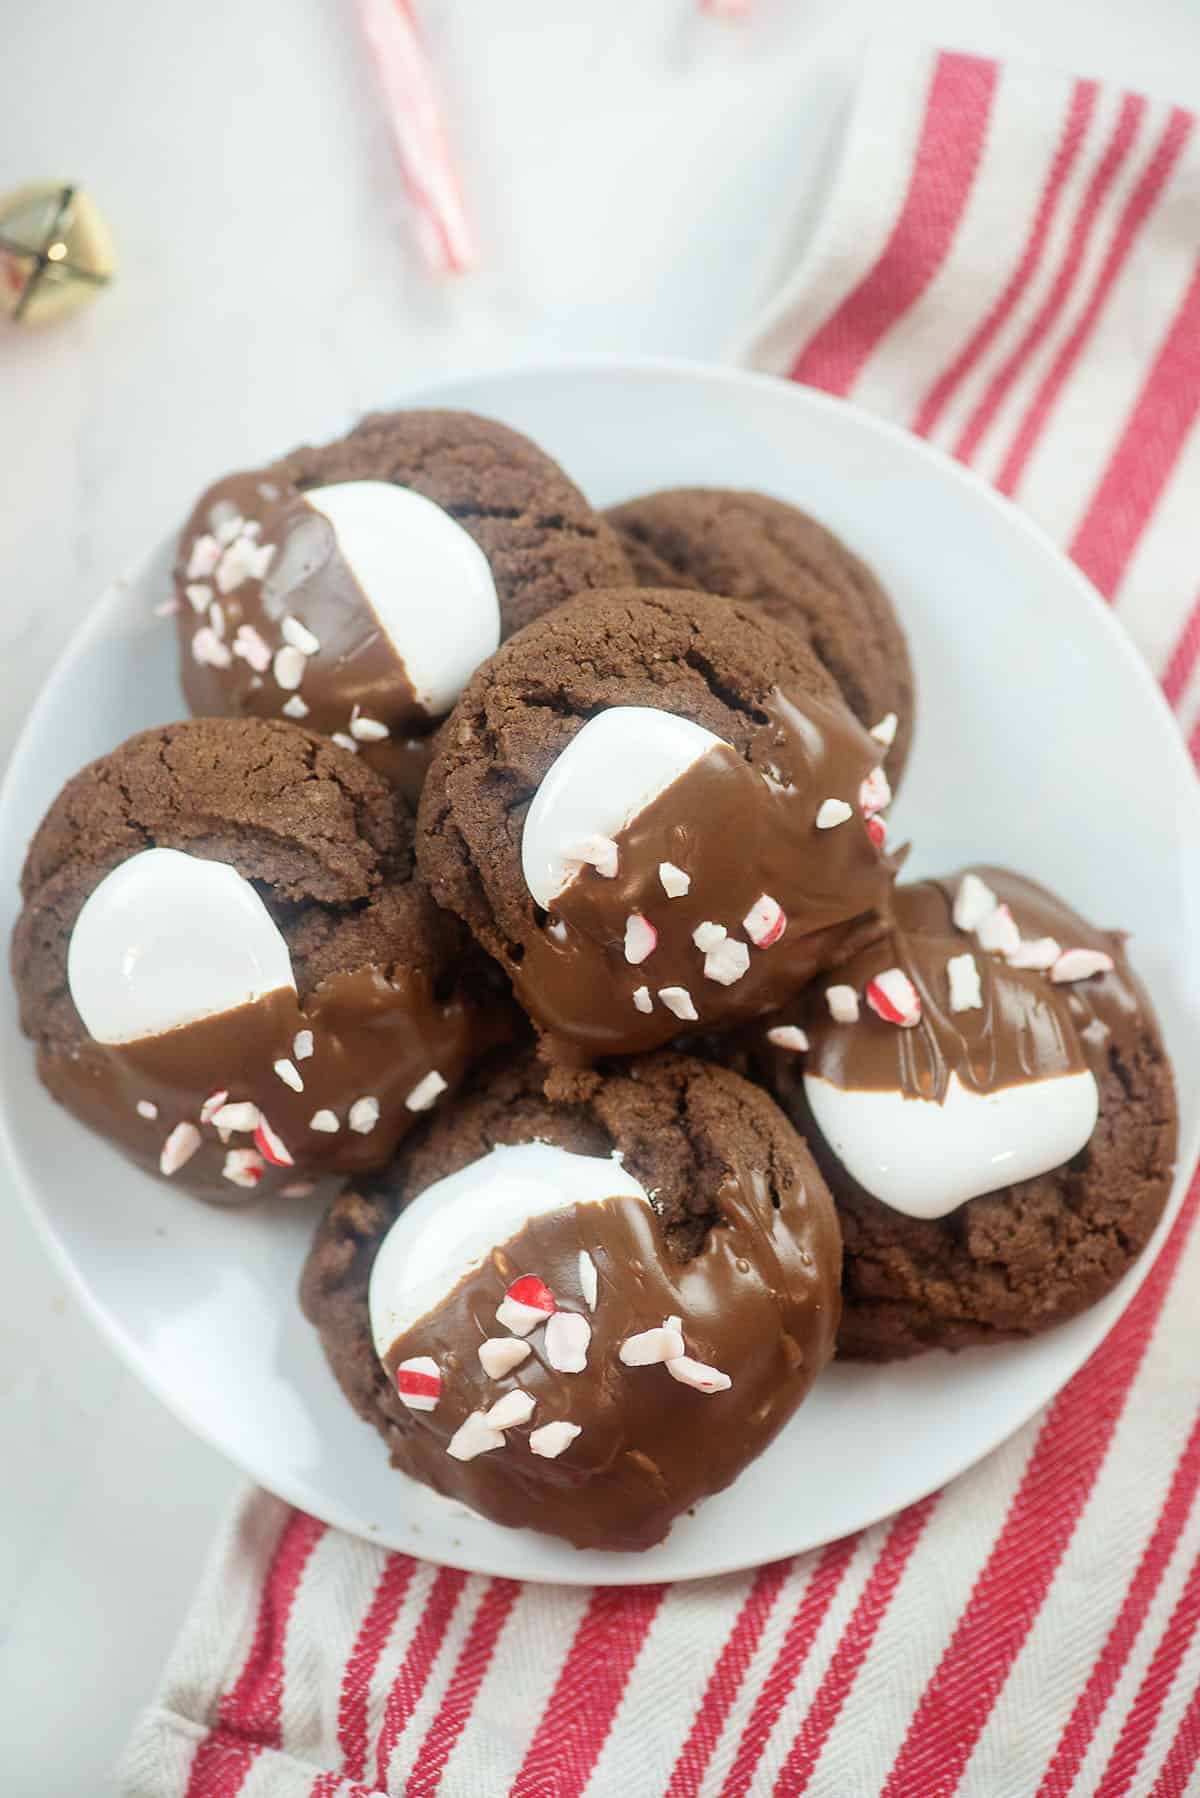 https://www.bunsinmyoven.com/wp-content/uploads/2020/12/peppermint-chocolate-cookies.jpg